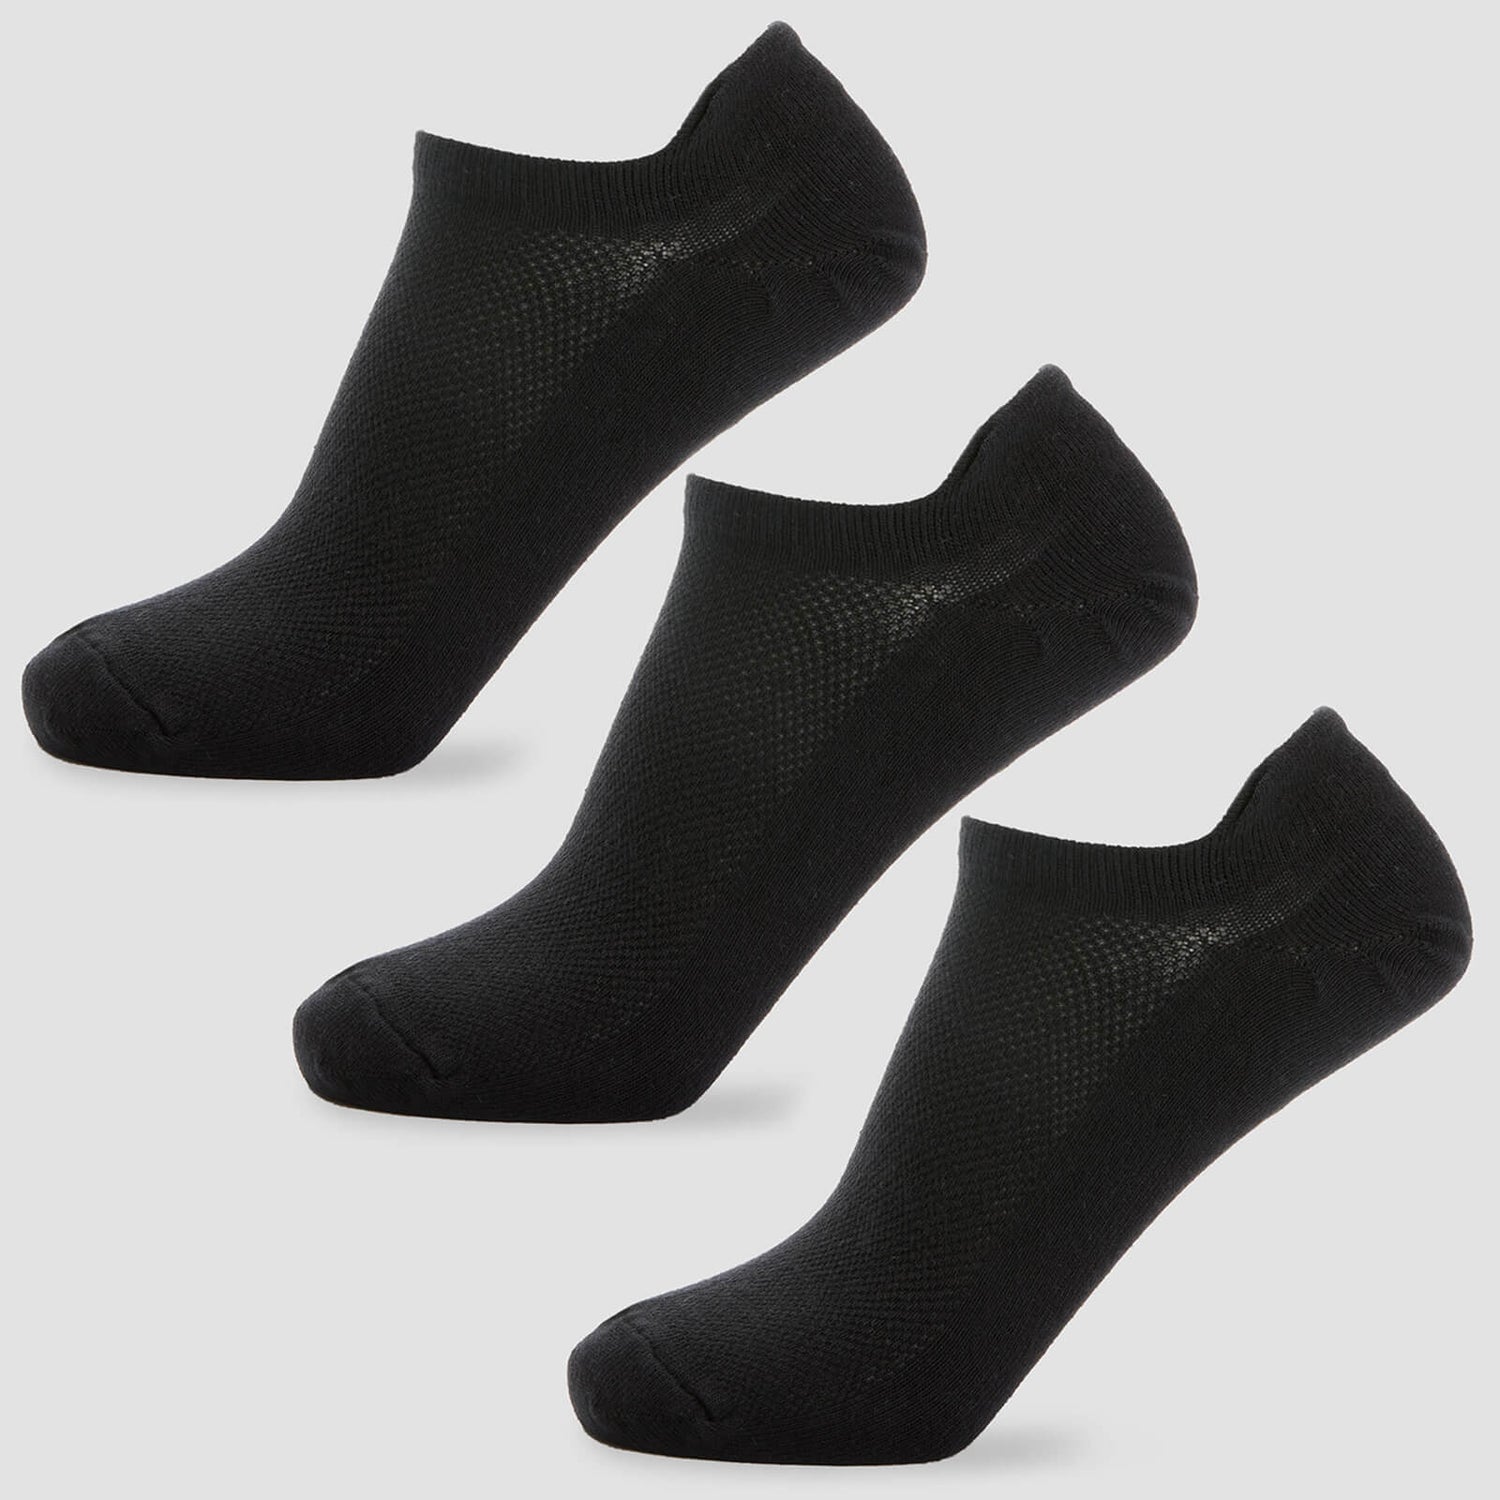 Men's Ankle Socks - Schwarz - UK 6-8